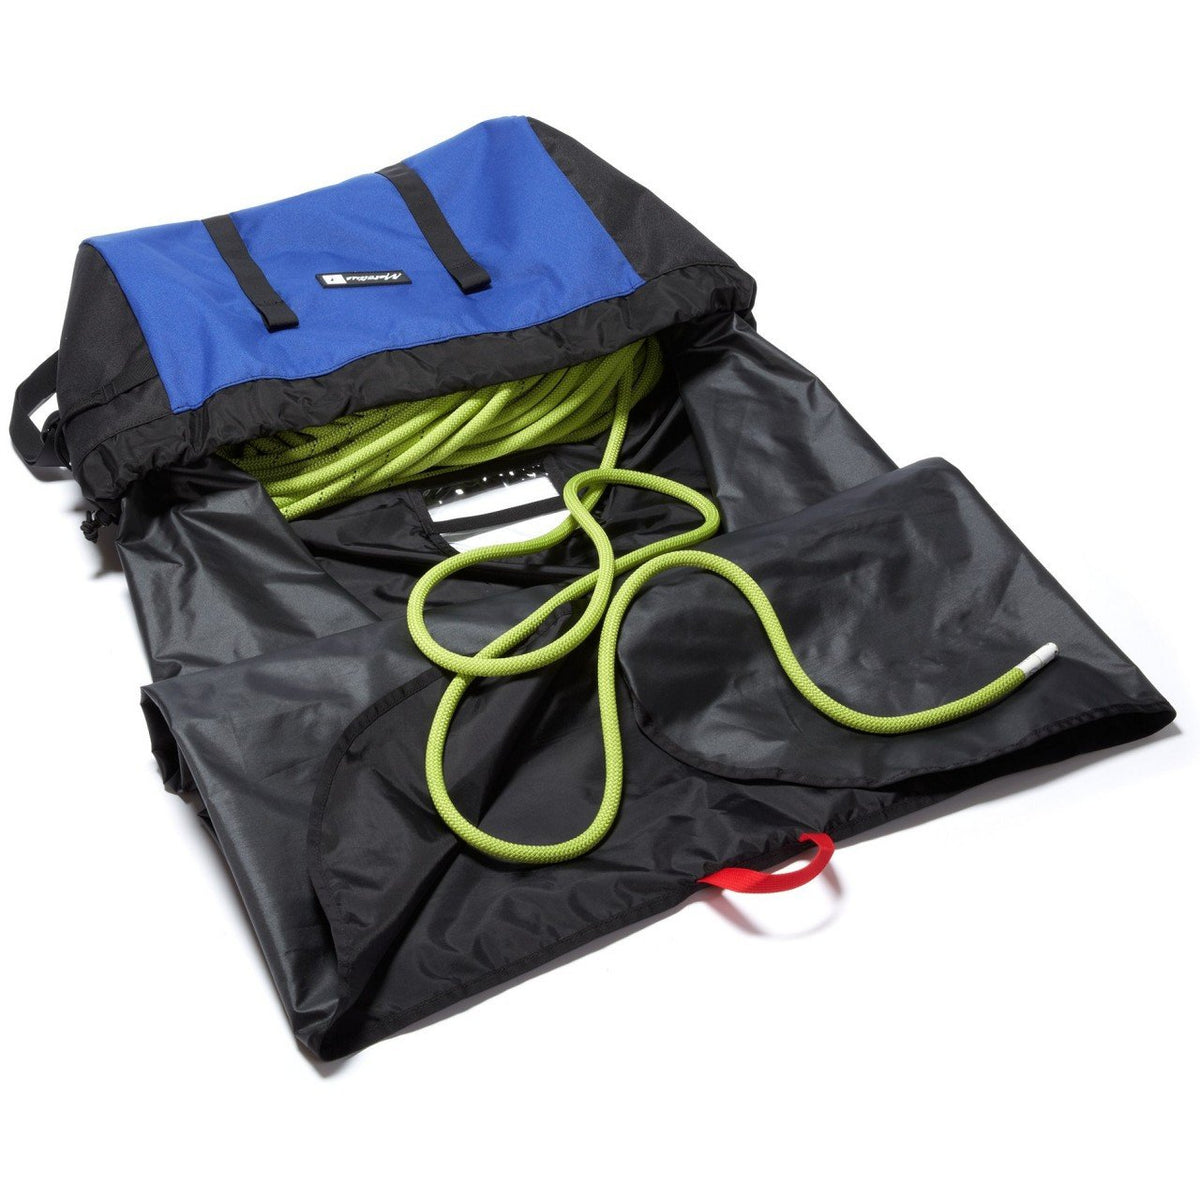 Metolius Ropemaster HC rope climbing bag, shown open with green rope